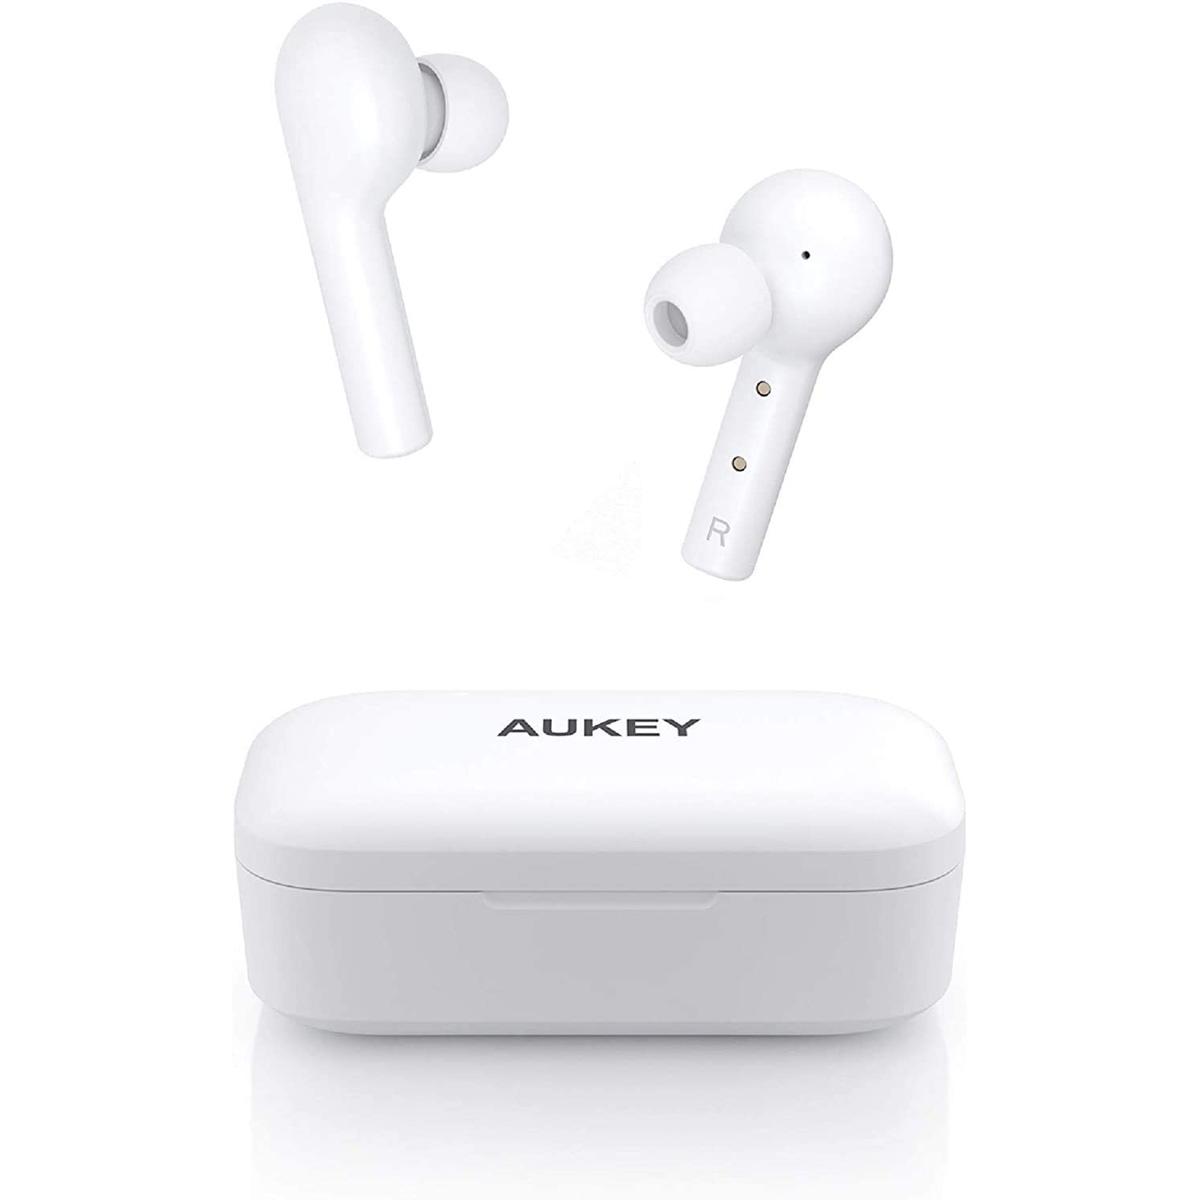 Aukey True Wireless Earbuds for $20.99